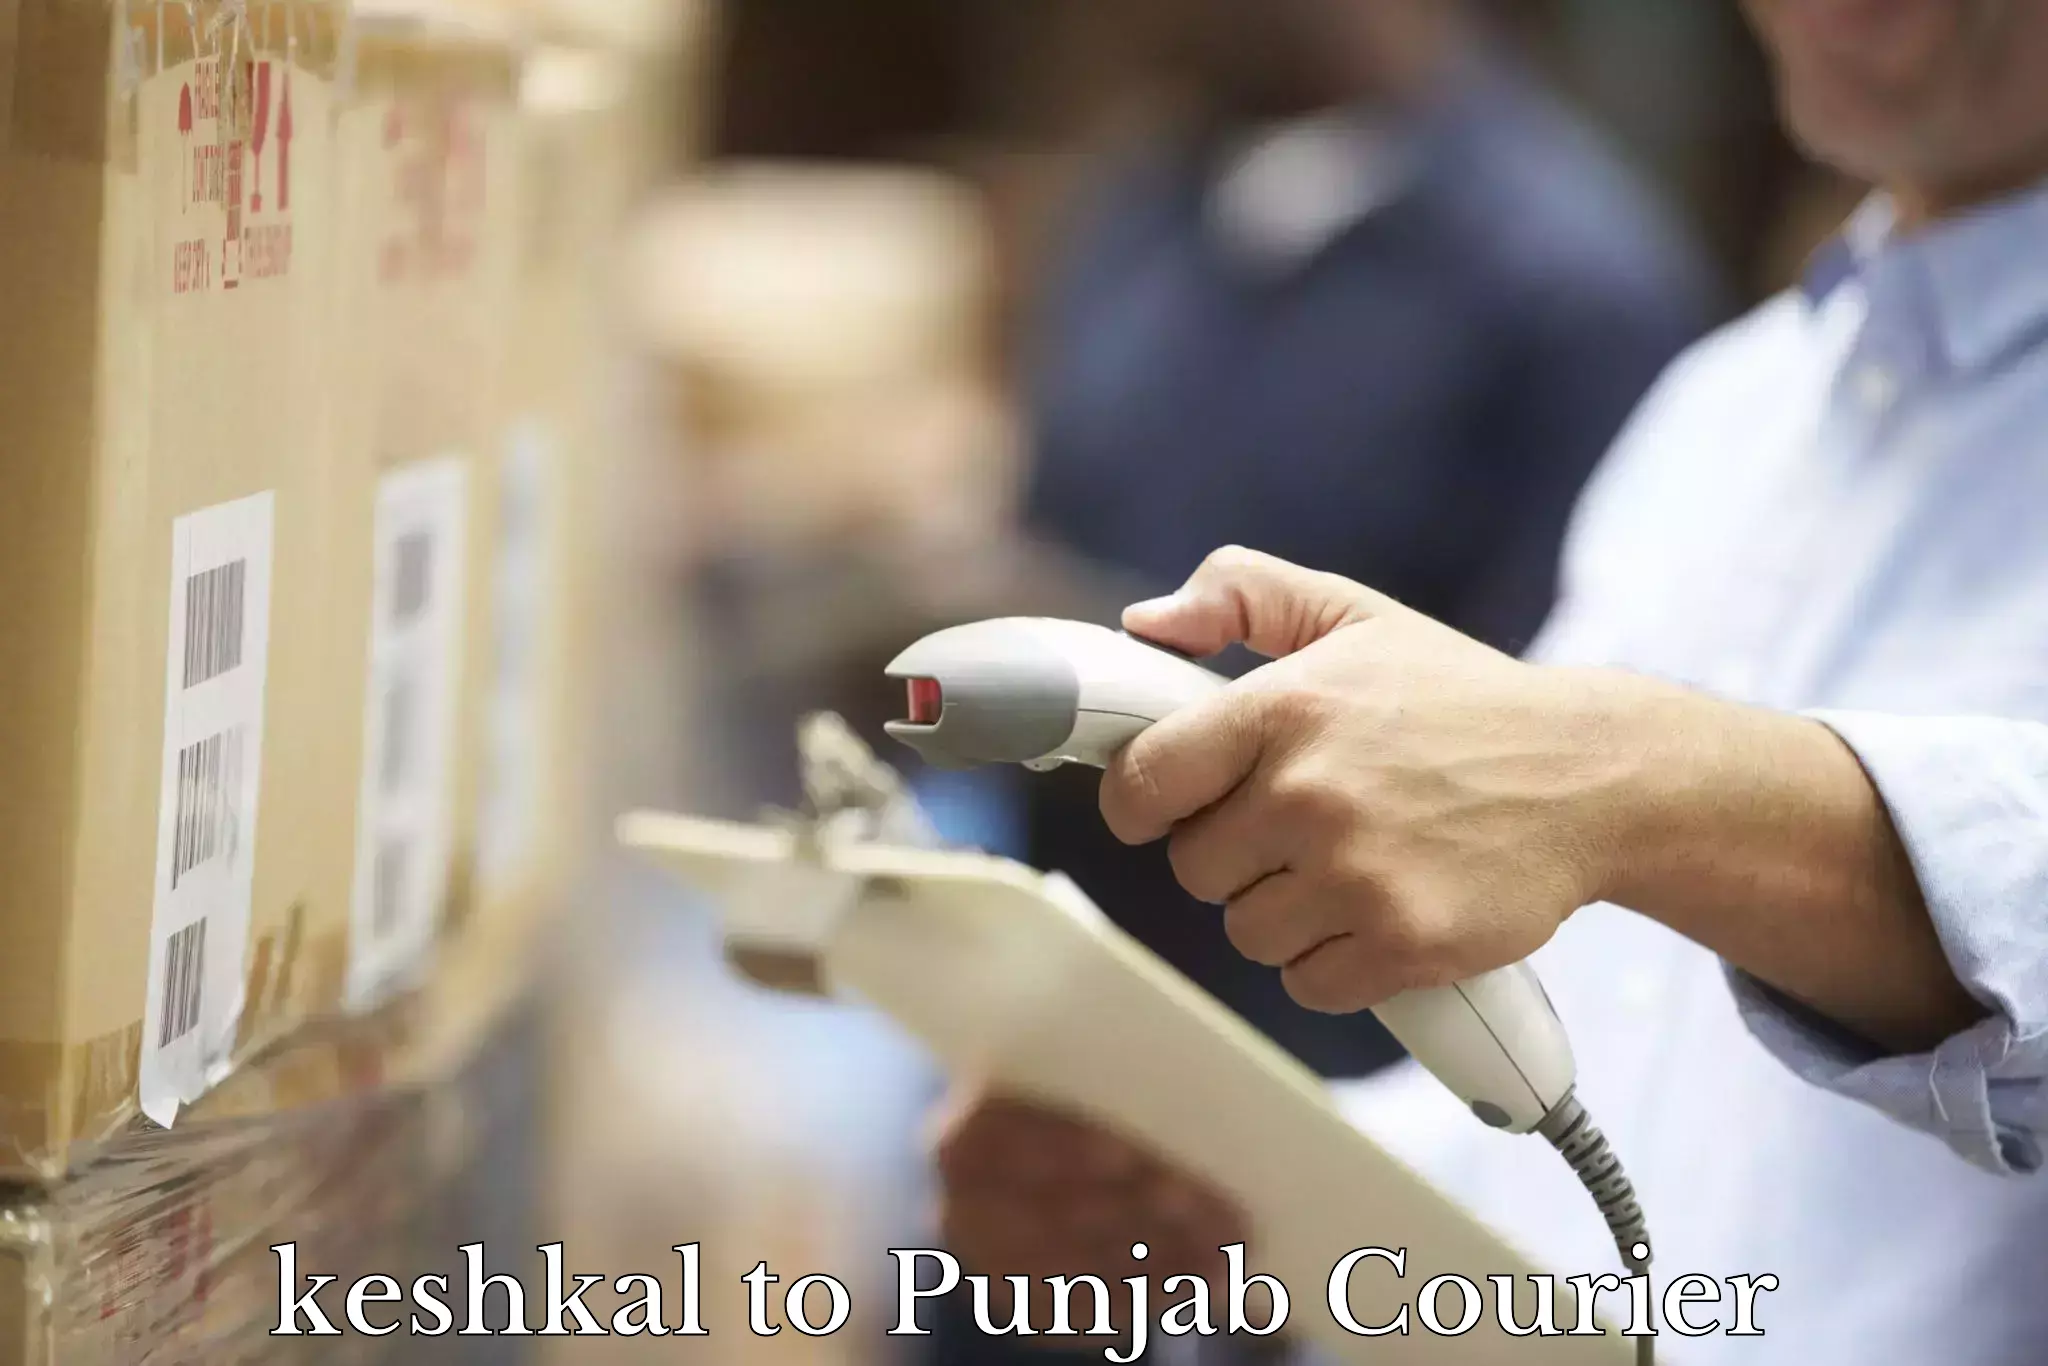 Parcel service for businesses keshkal to Fatehgarh Sahib